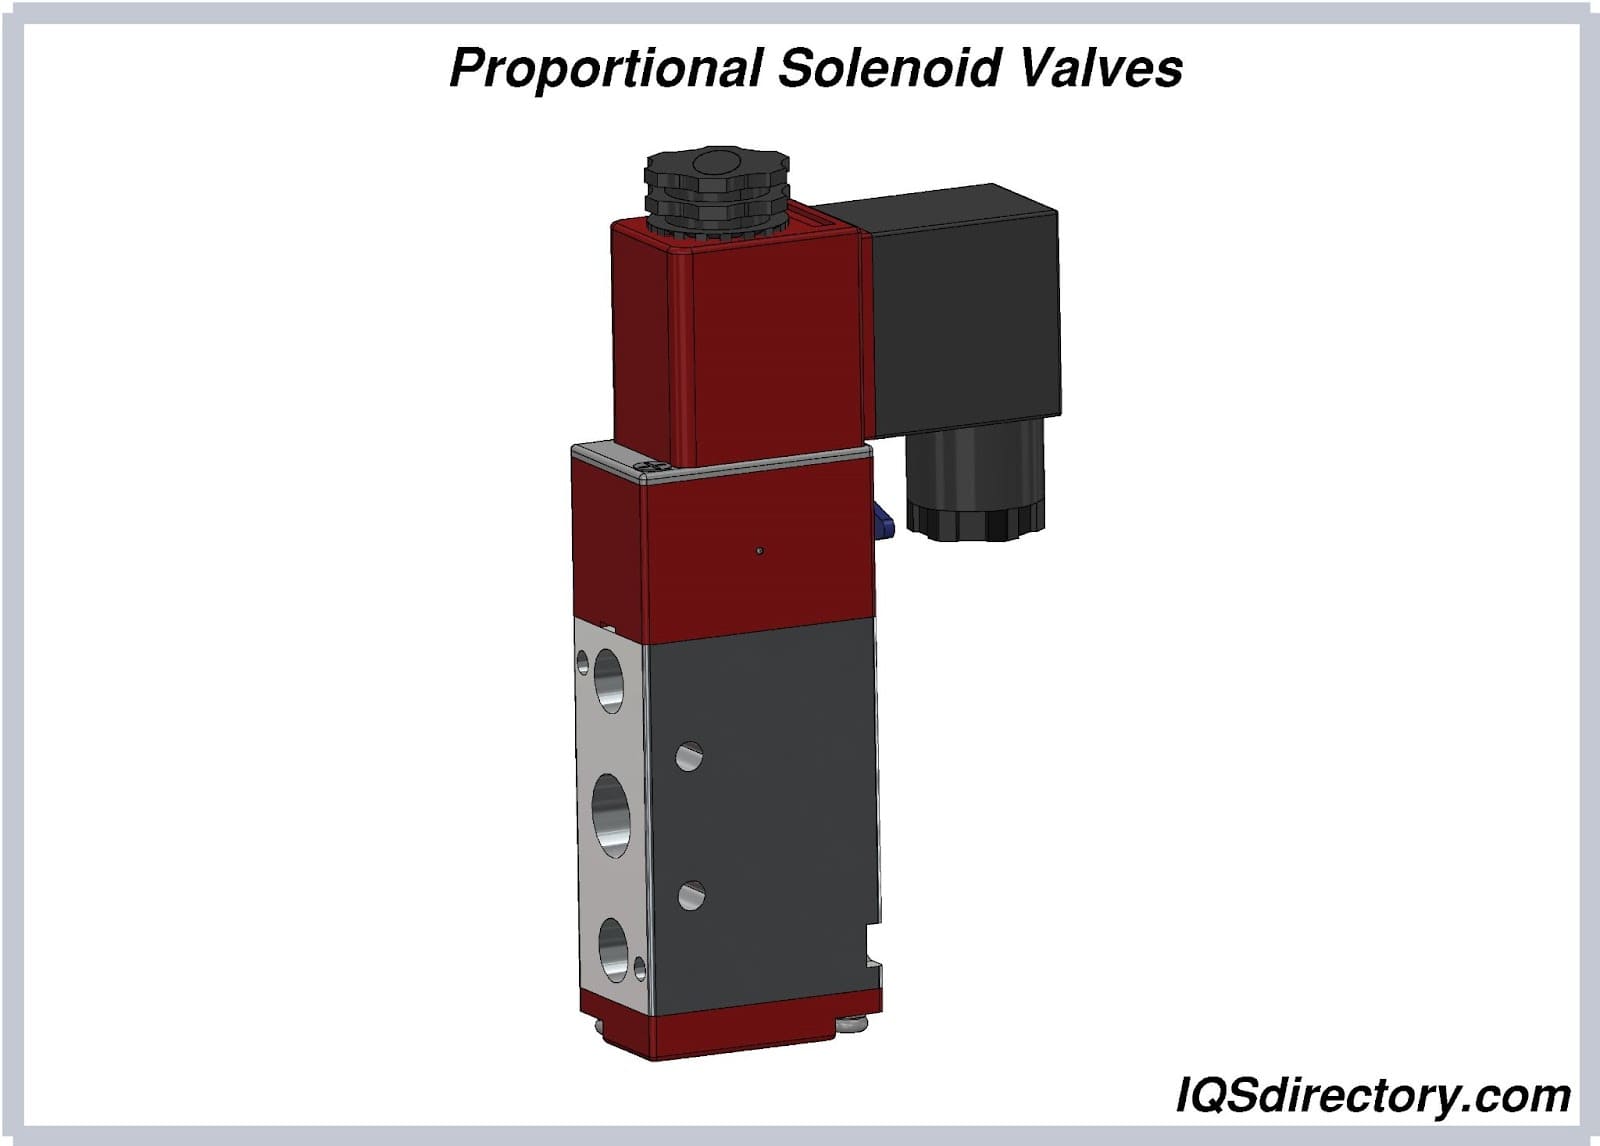 Proportional Solenoid Valves